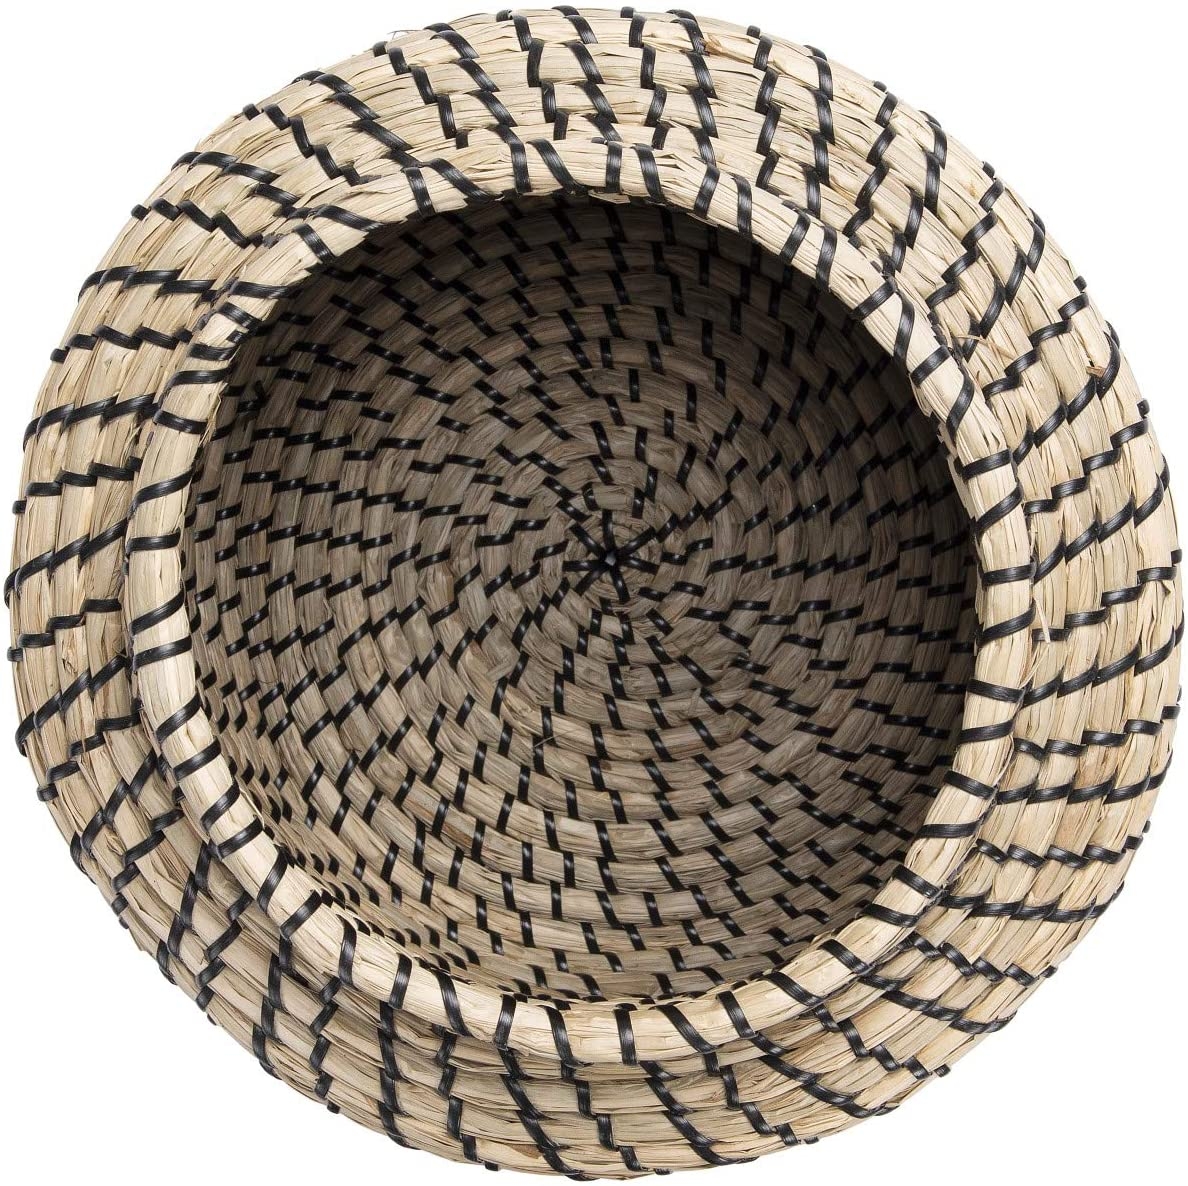 Handwoven Seagrass Basket - Image 2